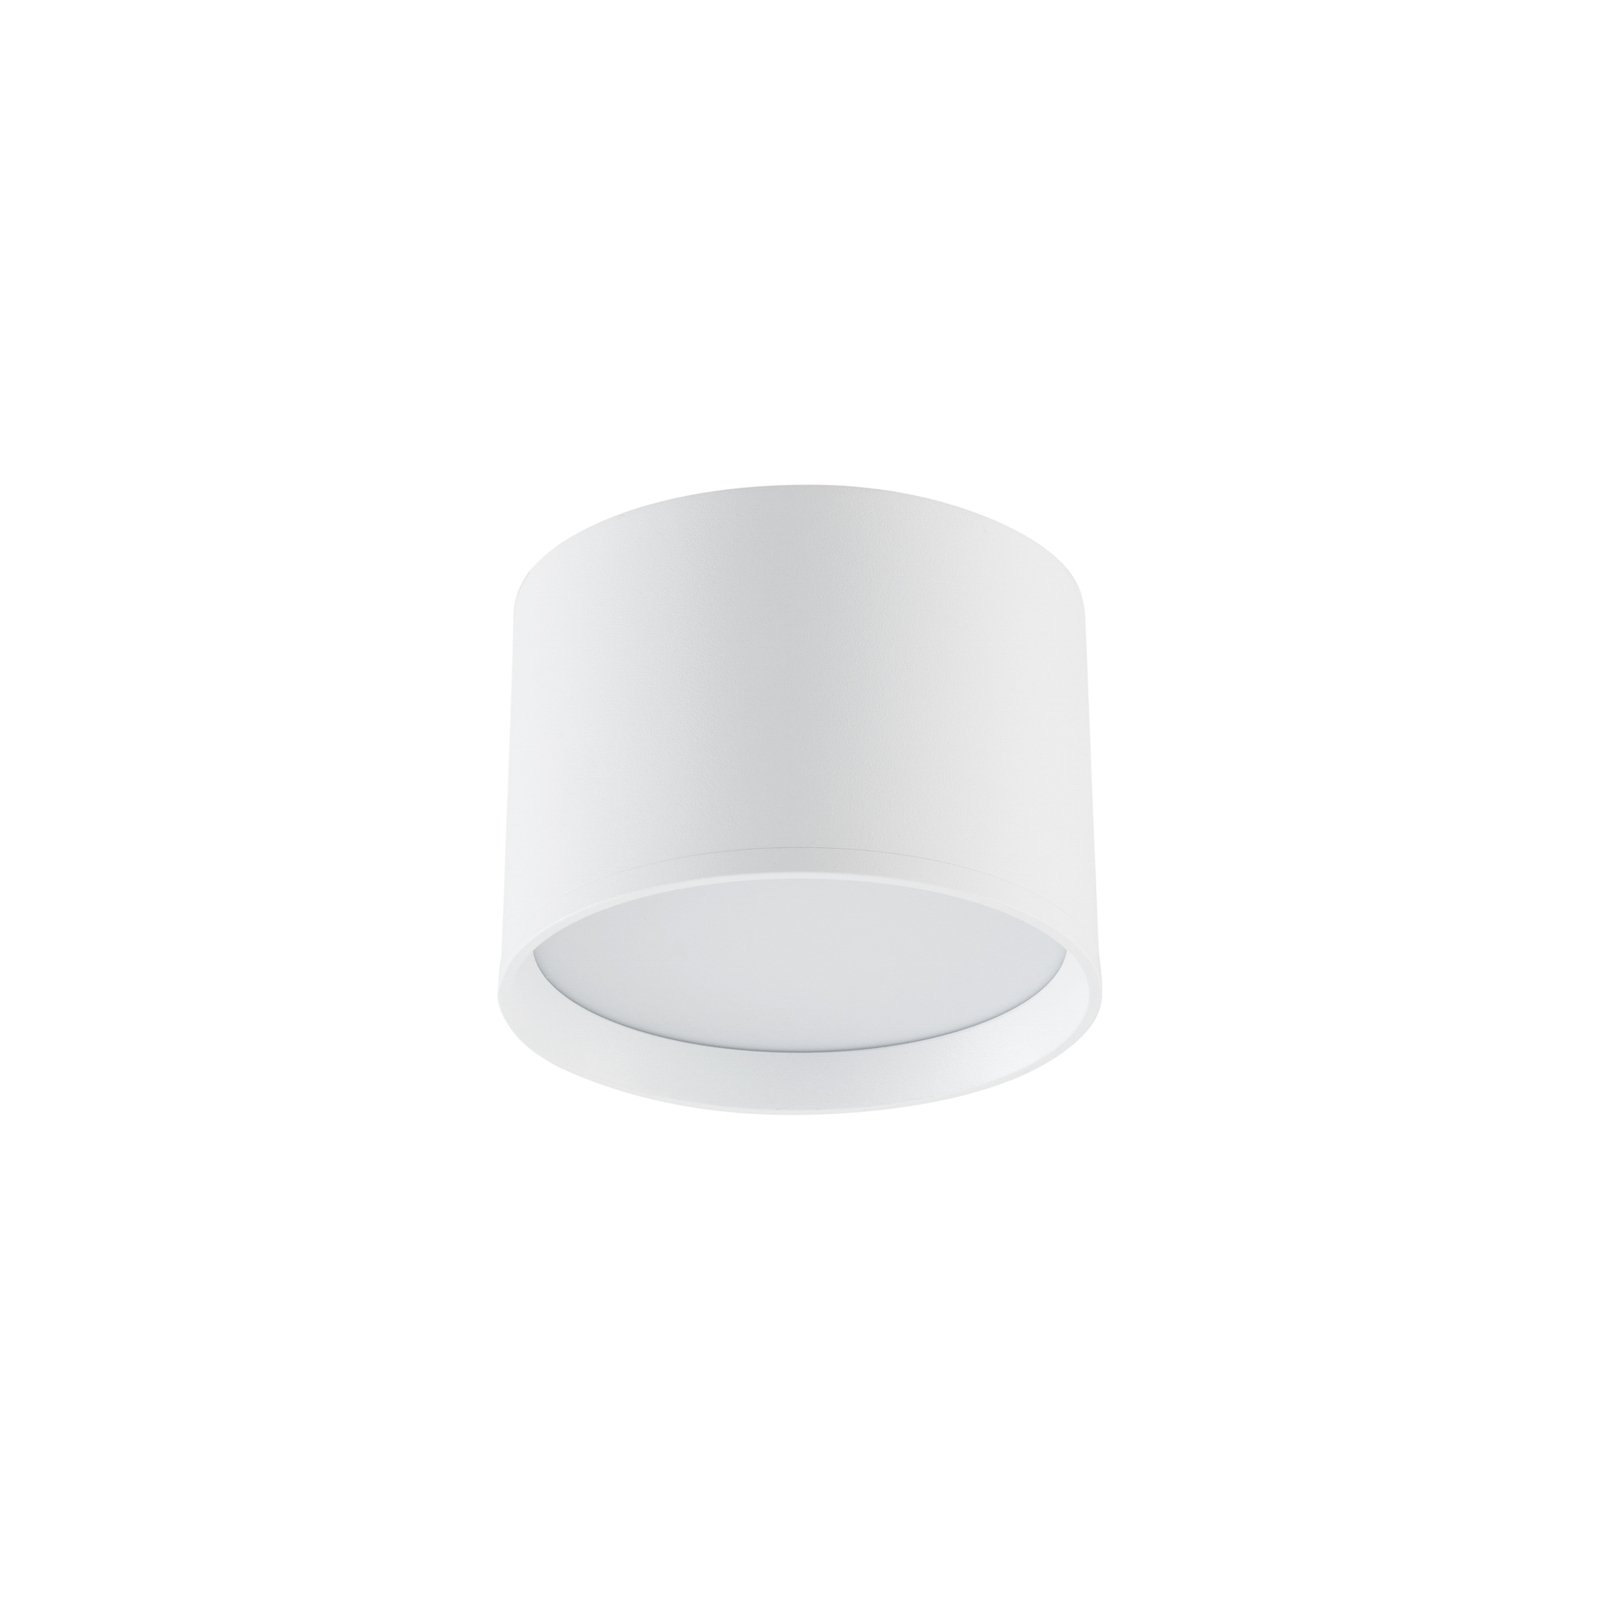 Faretto LED Nivoria di Lindby, Ø 12 cm, bianco sabbia, set di 4 pezzi